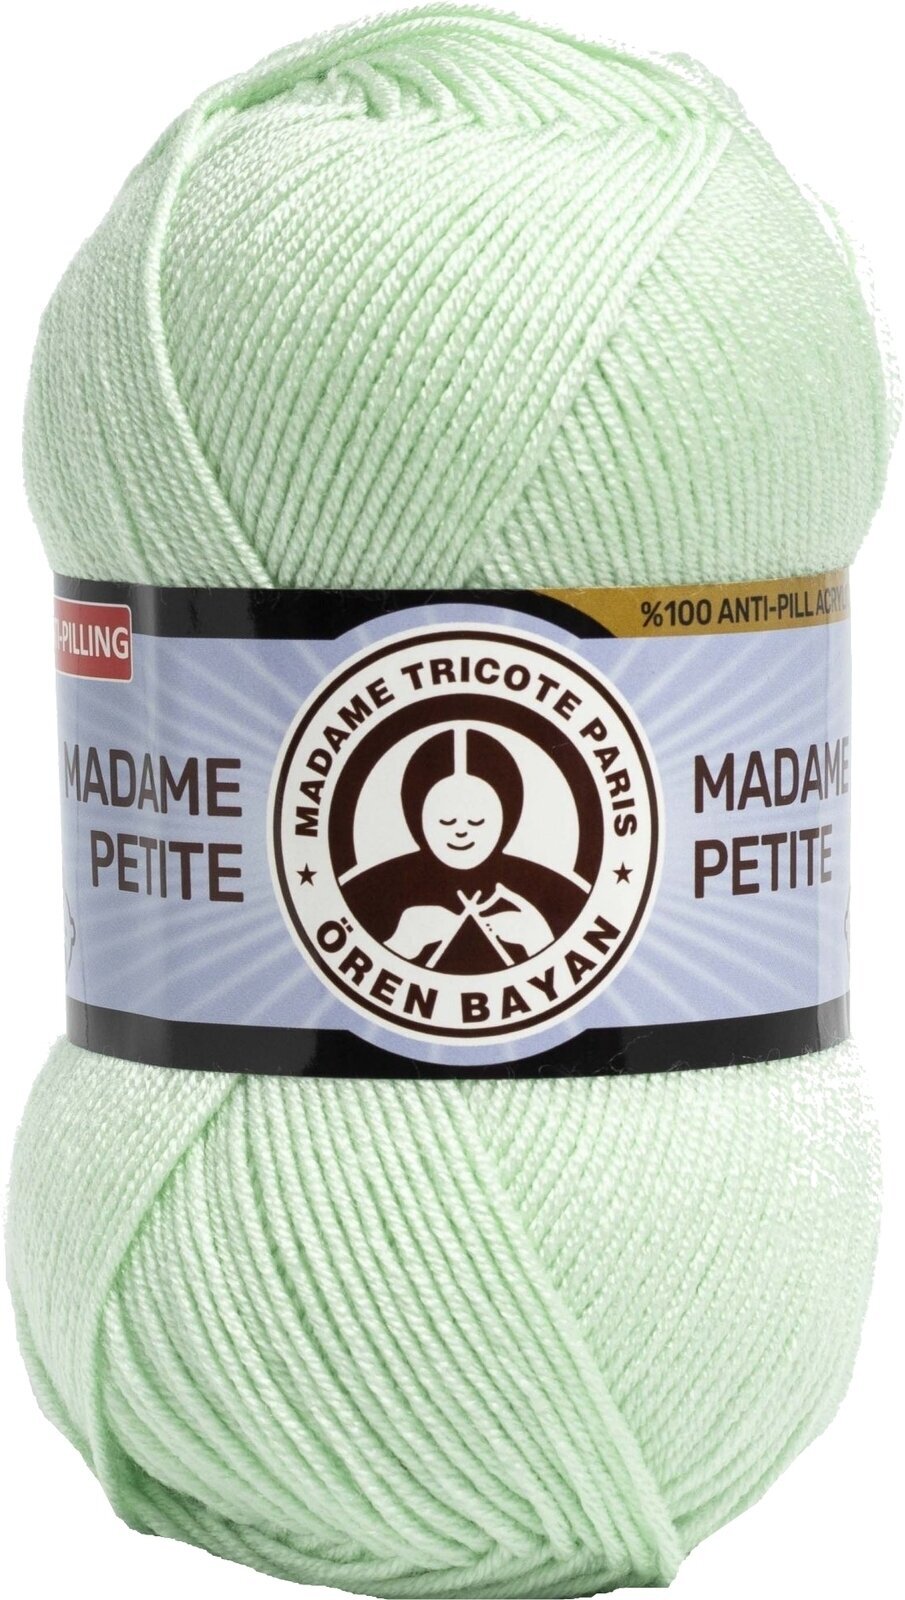 Strickgarn Madame Tricote Paris Madame Petite 3848 90 Strickgarn